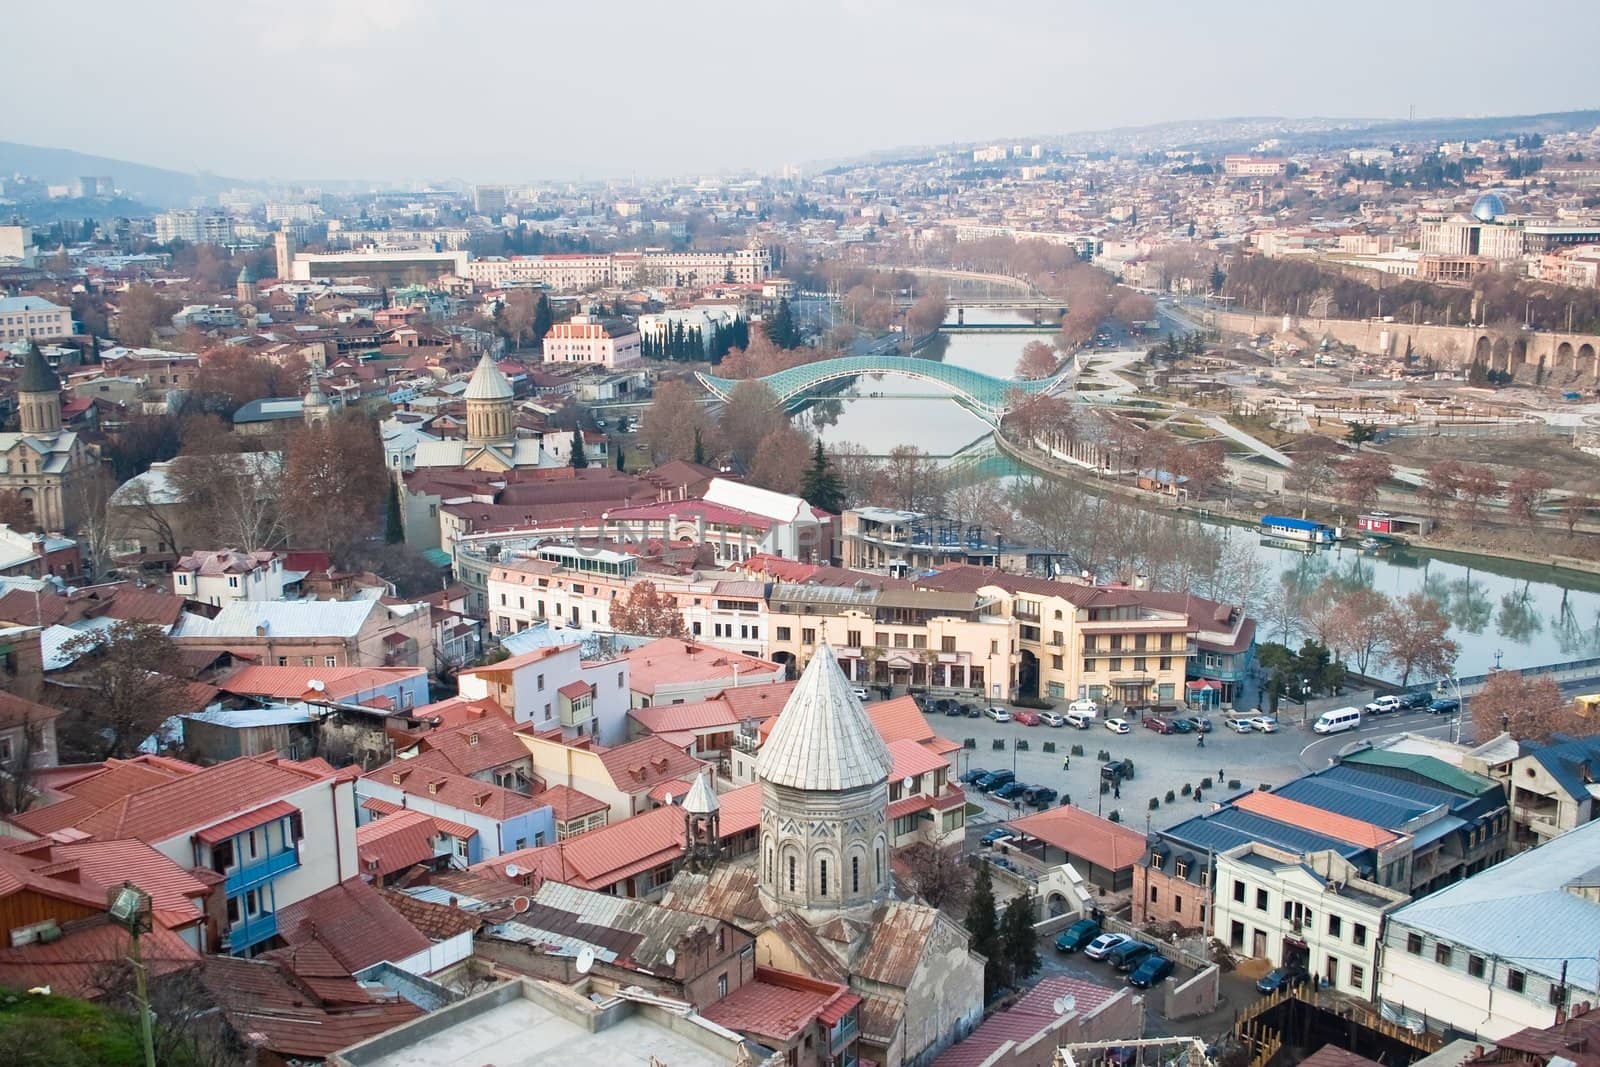 Panoramic view of Tbilisi city with medieval castle of Narikala , Republic of Georgia, Caucasus regionll